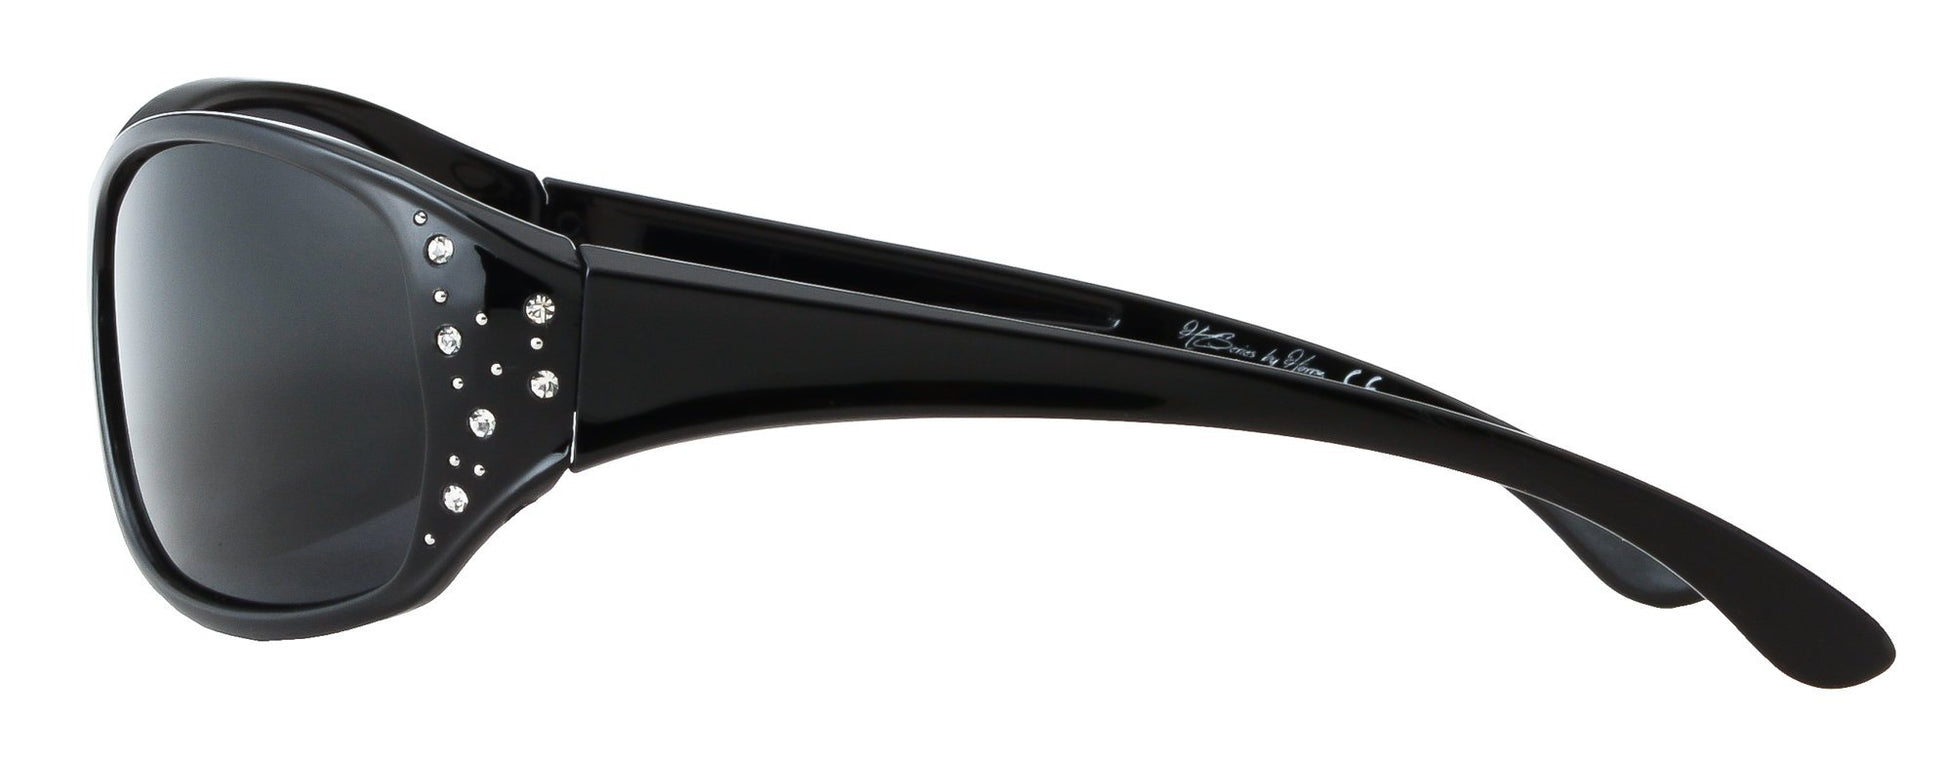 Third image: Polarized Sunglasses for Women – Midnight Black Frame – Dark Smoke Lens – HZ Series Elettra – Women’s Premium Designer Fashion Sunglasses